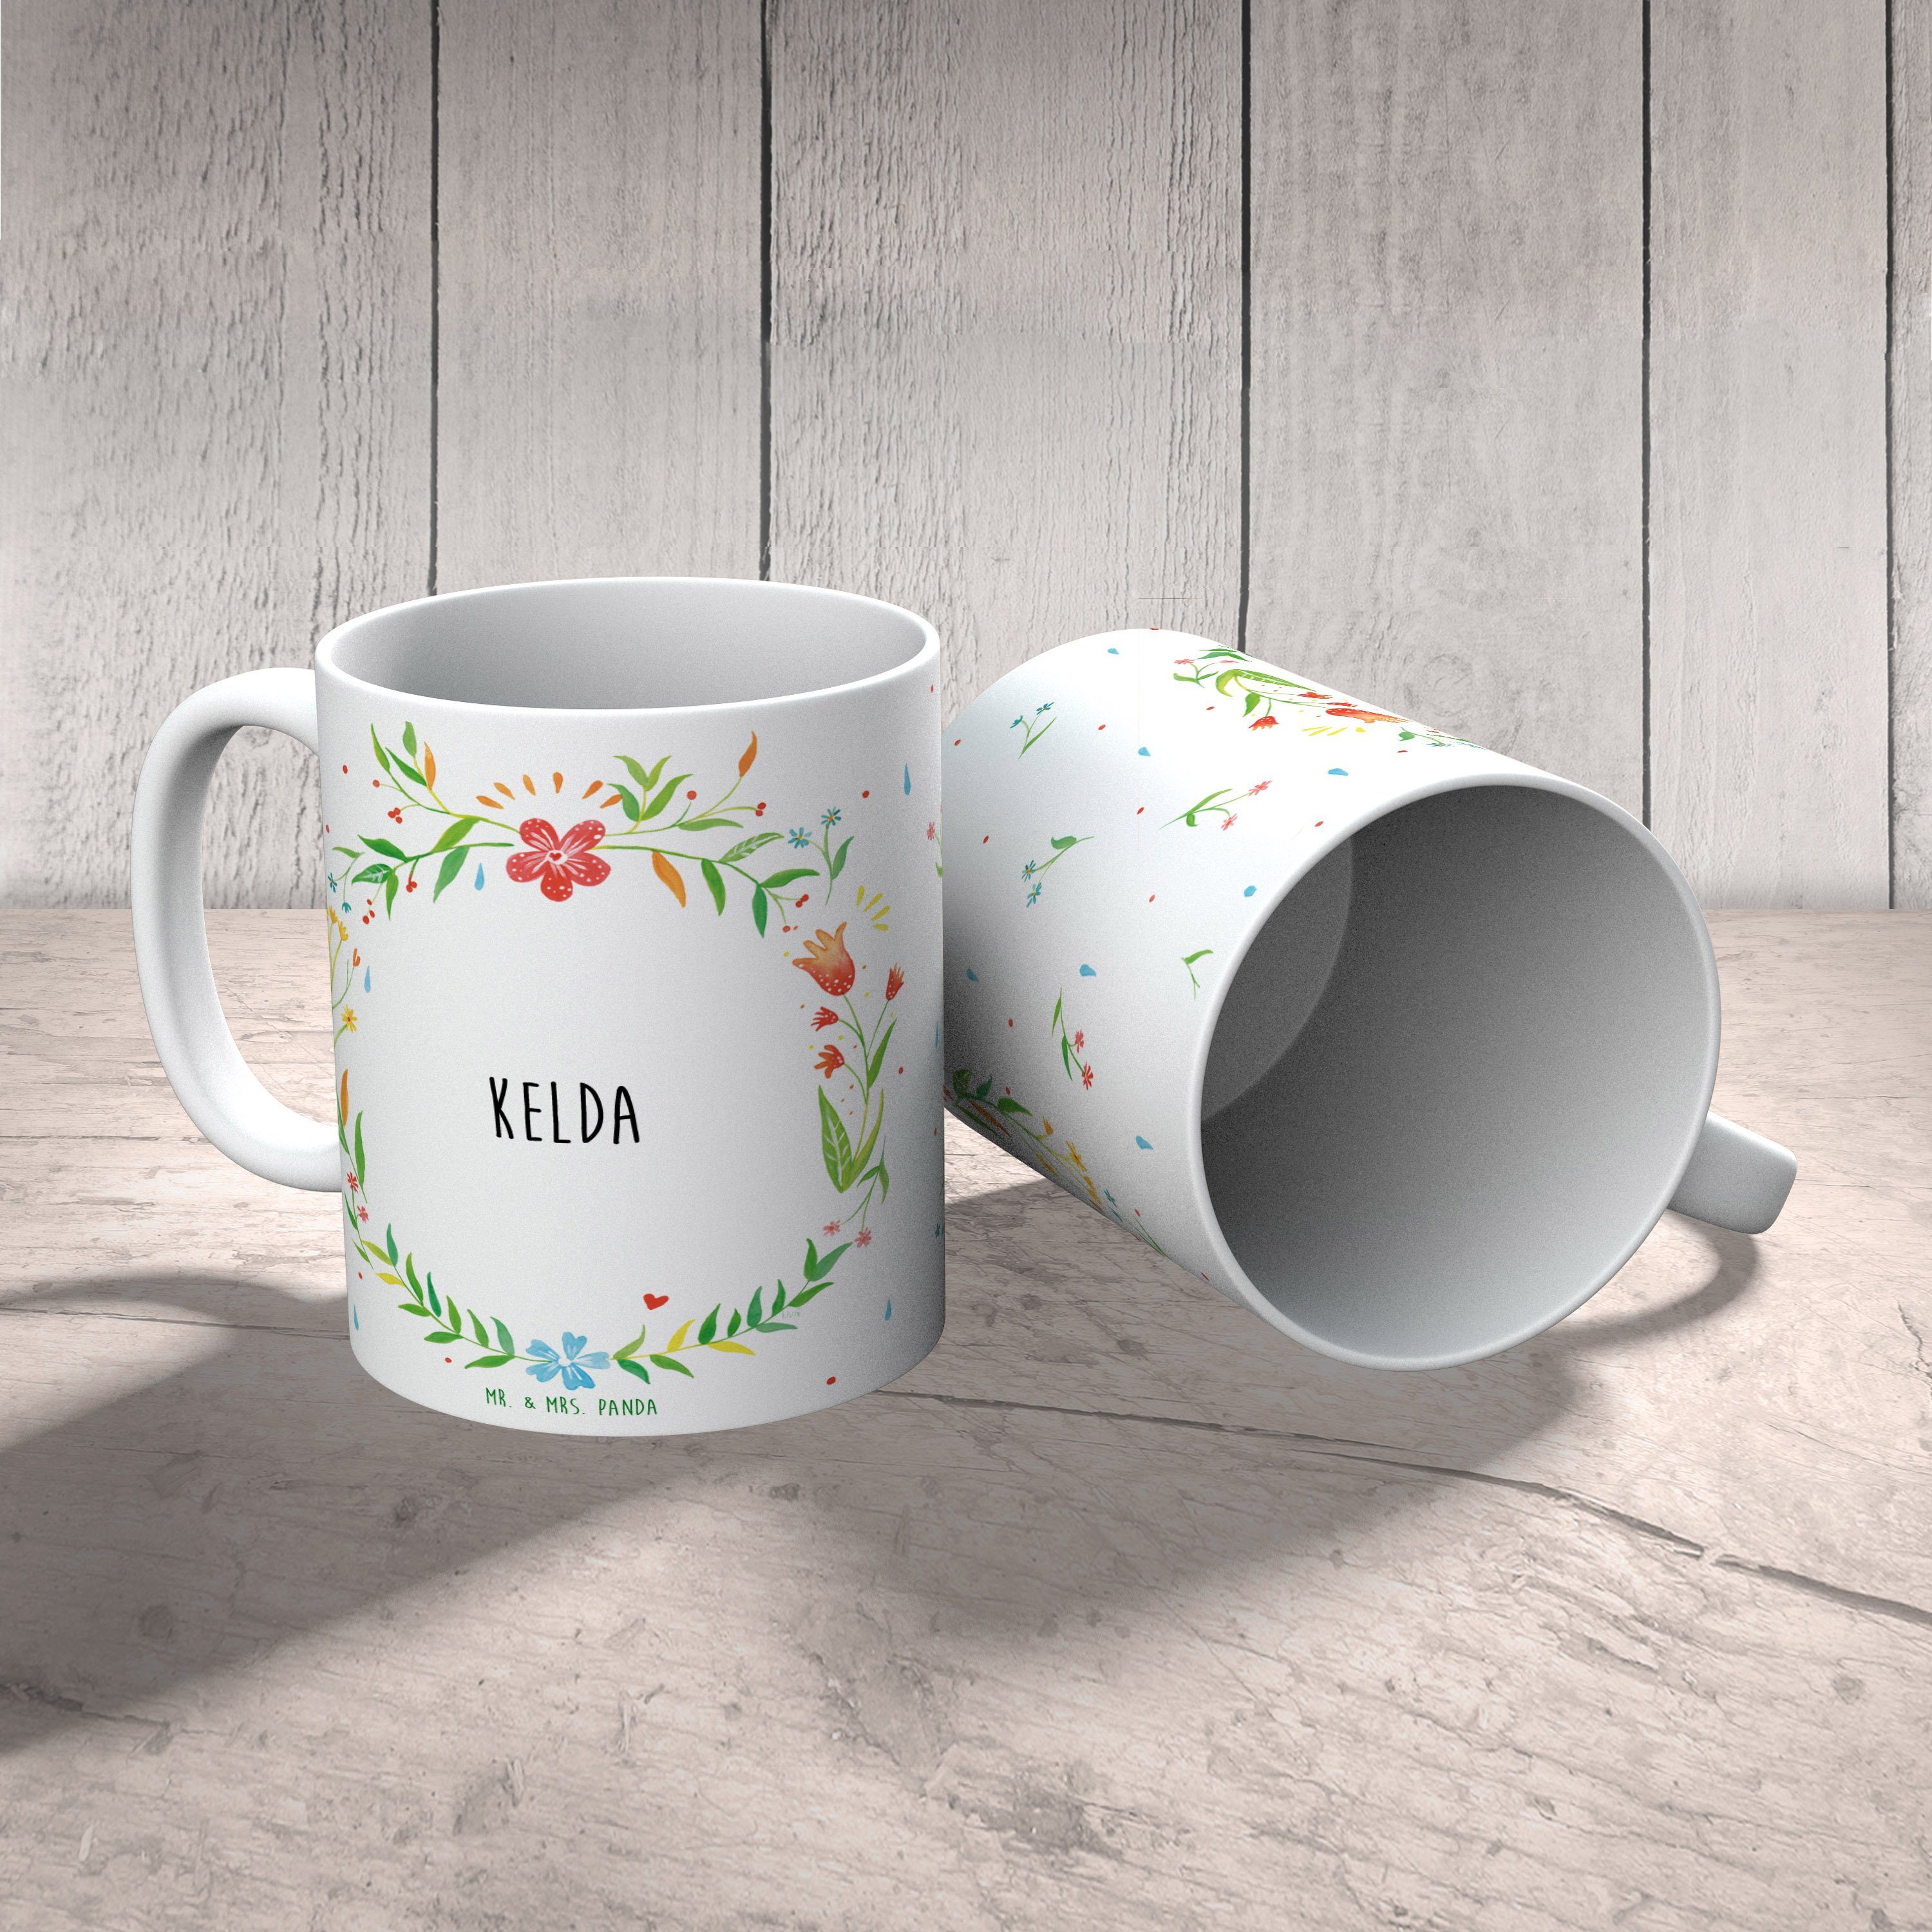 Mr. & Mrs. Panda Tasse Keramik Kaffeebecher, Tasse Kaffeetasse, Geschenk, - Kelda Motive, Teebecher